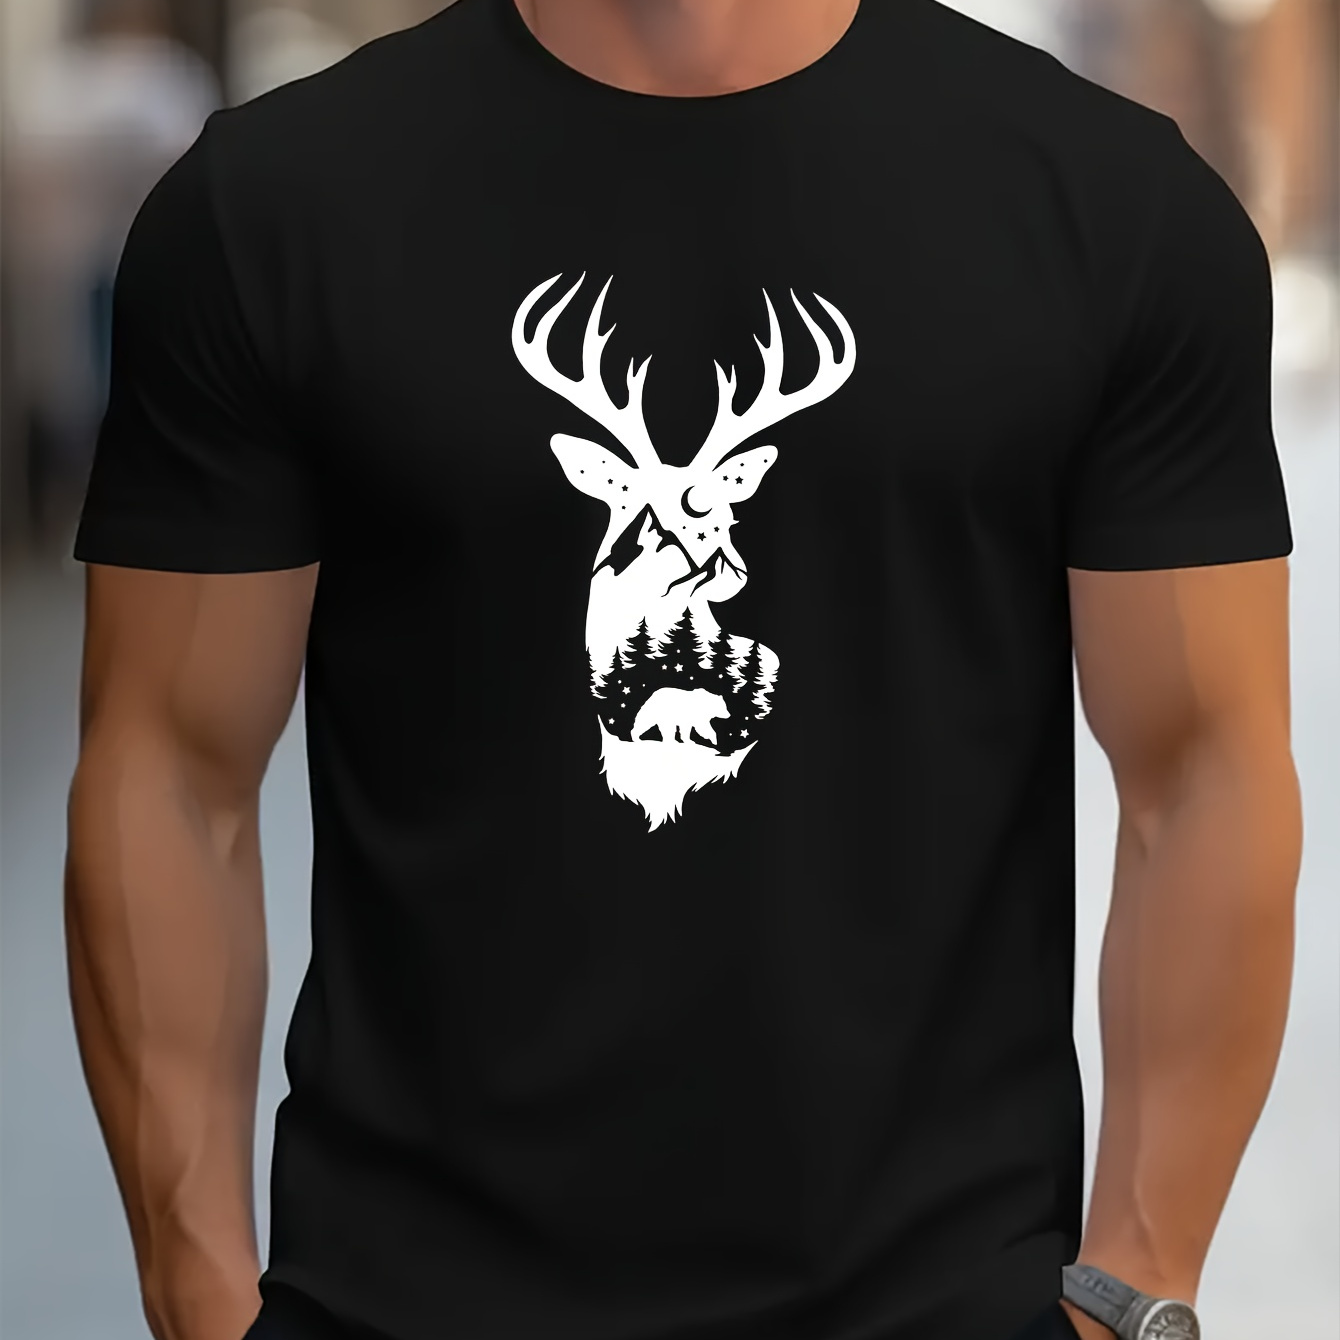 

Deer Print Tee Shirt, Tees For Men, Casual Short Sleeve T-shirt For Summer